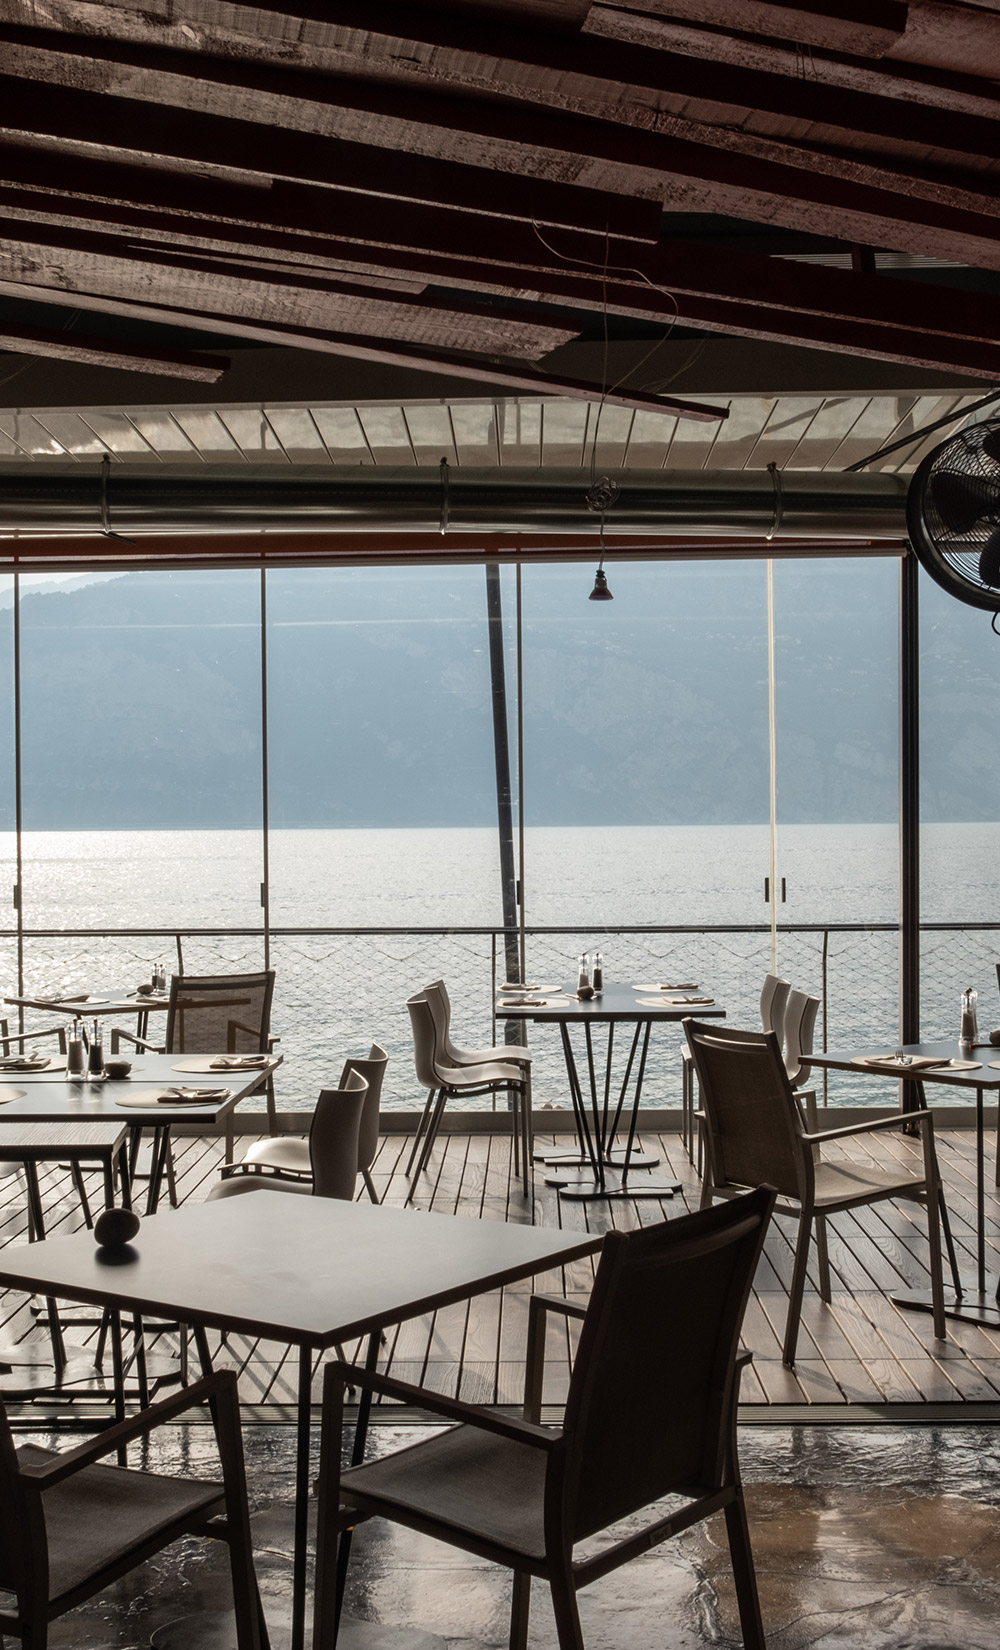 Taste of rossovivo Ambienthotel Primaluna in Malcesine on Garda lake